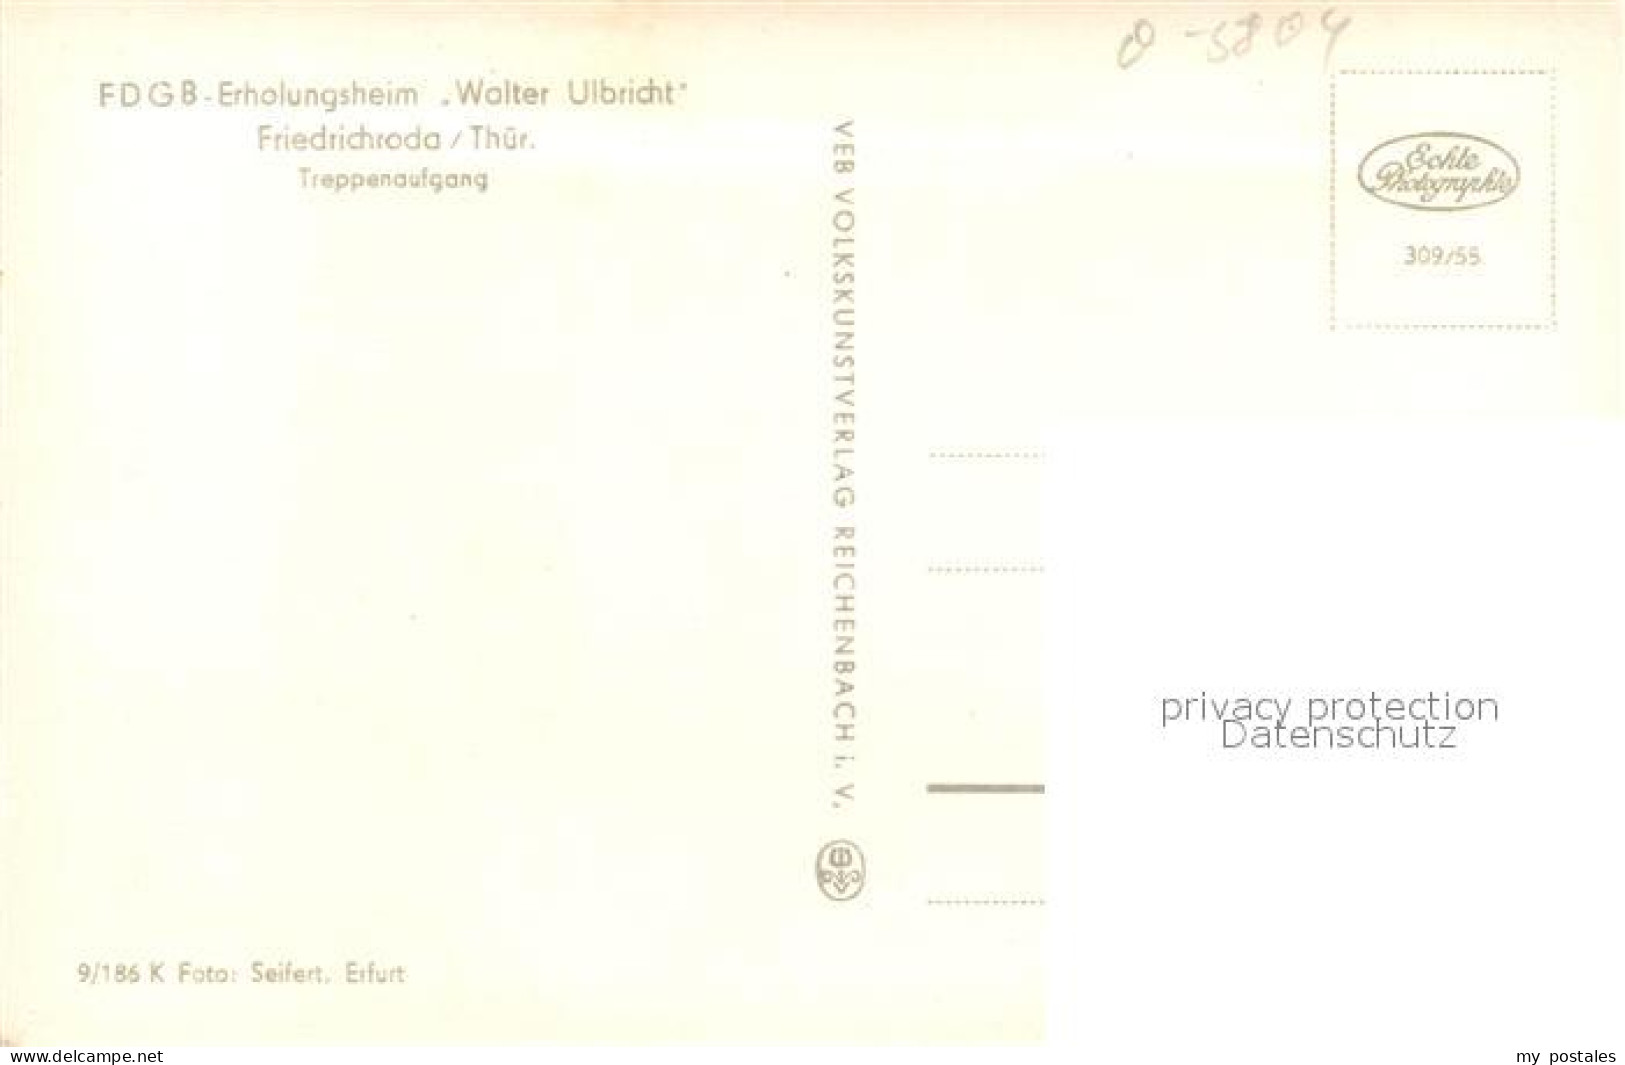 43495095 Friedrichsroda FDGB Erholungsheim Walter Ulbricht Treppenaufgang Friedr - Gotha